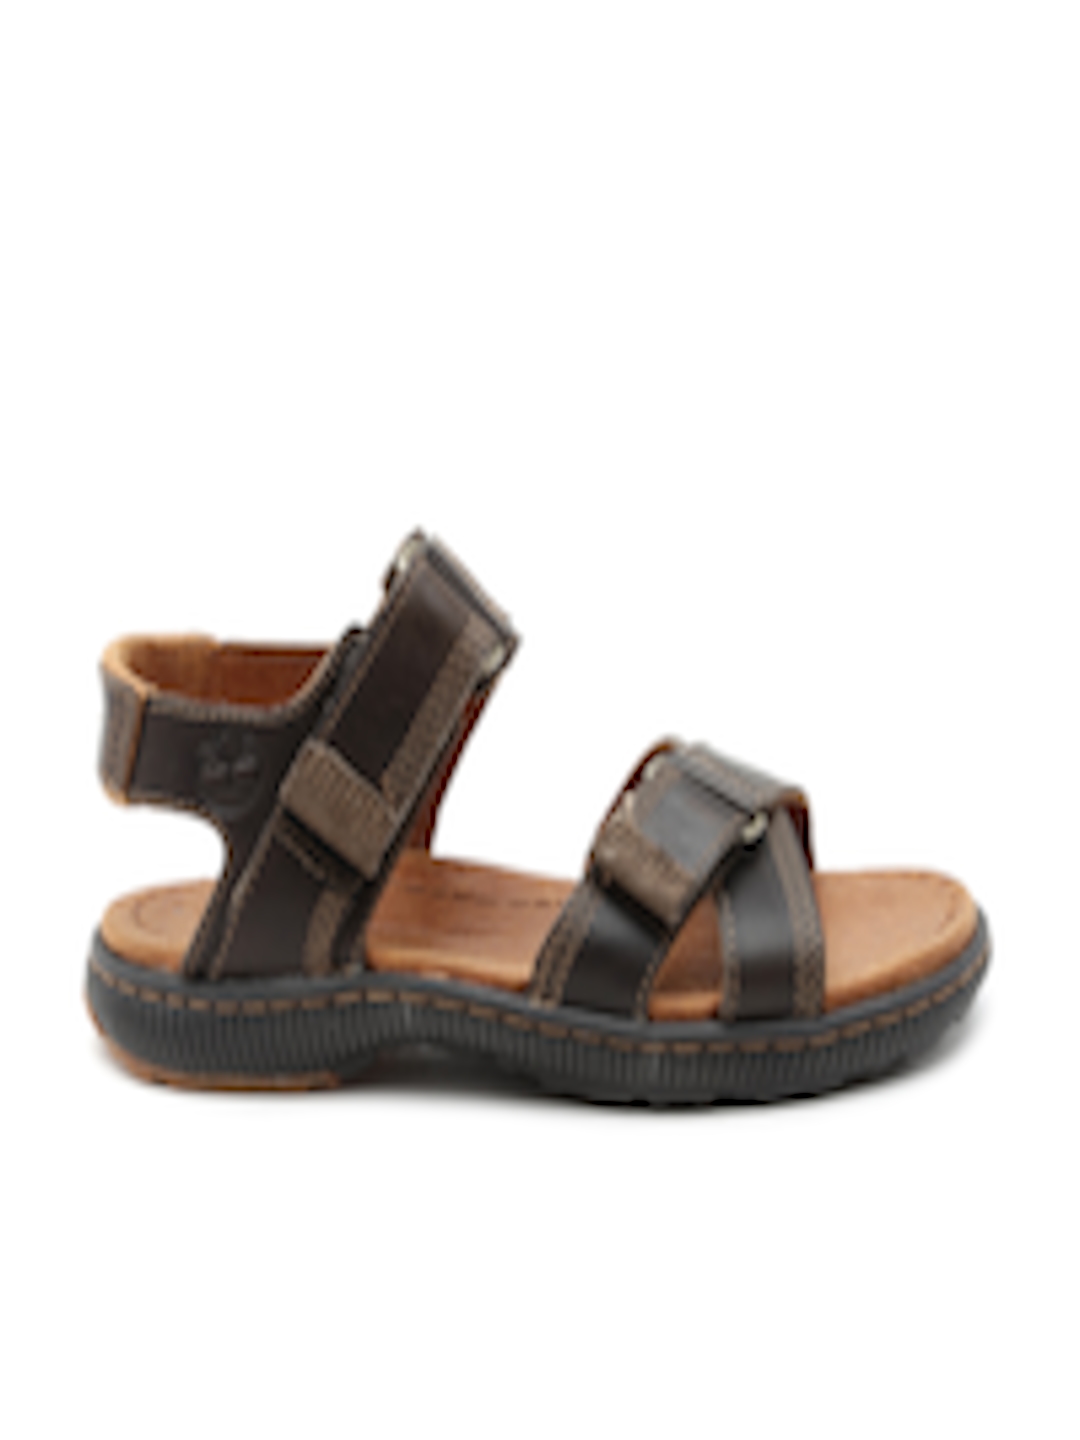 Buy Timberland Men Brown Leather Sandals - Sandals for Men 1425635 | Myntra